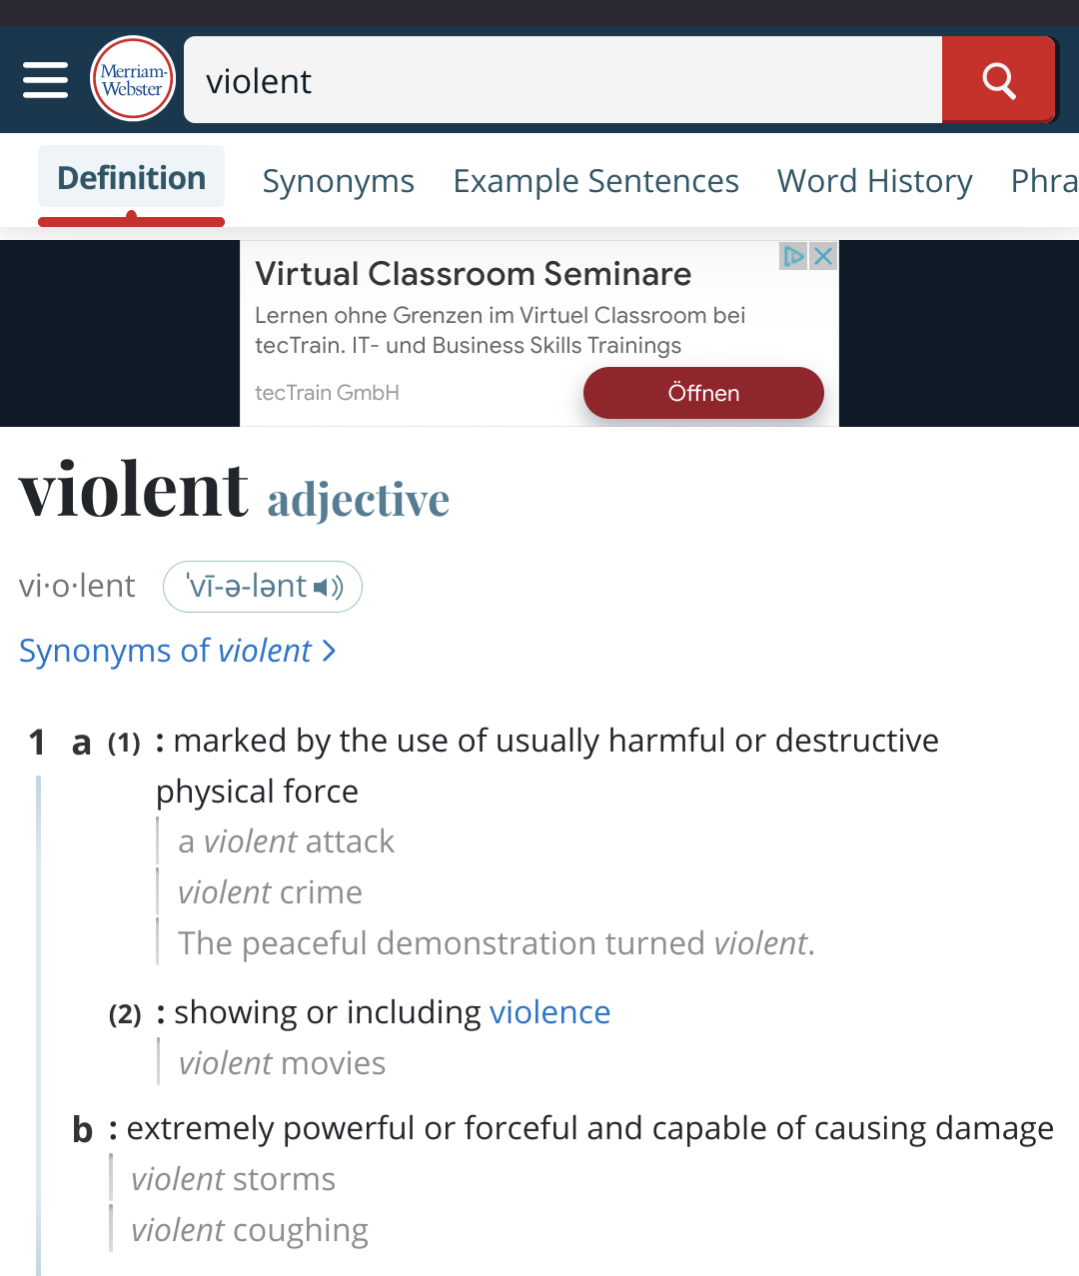 Definition of Violent from Merriam-Webster